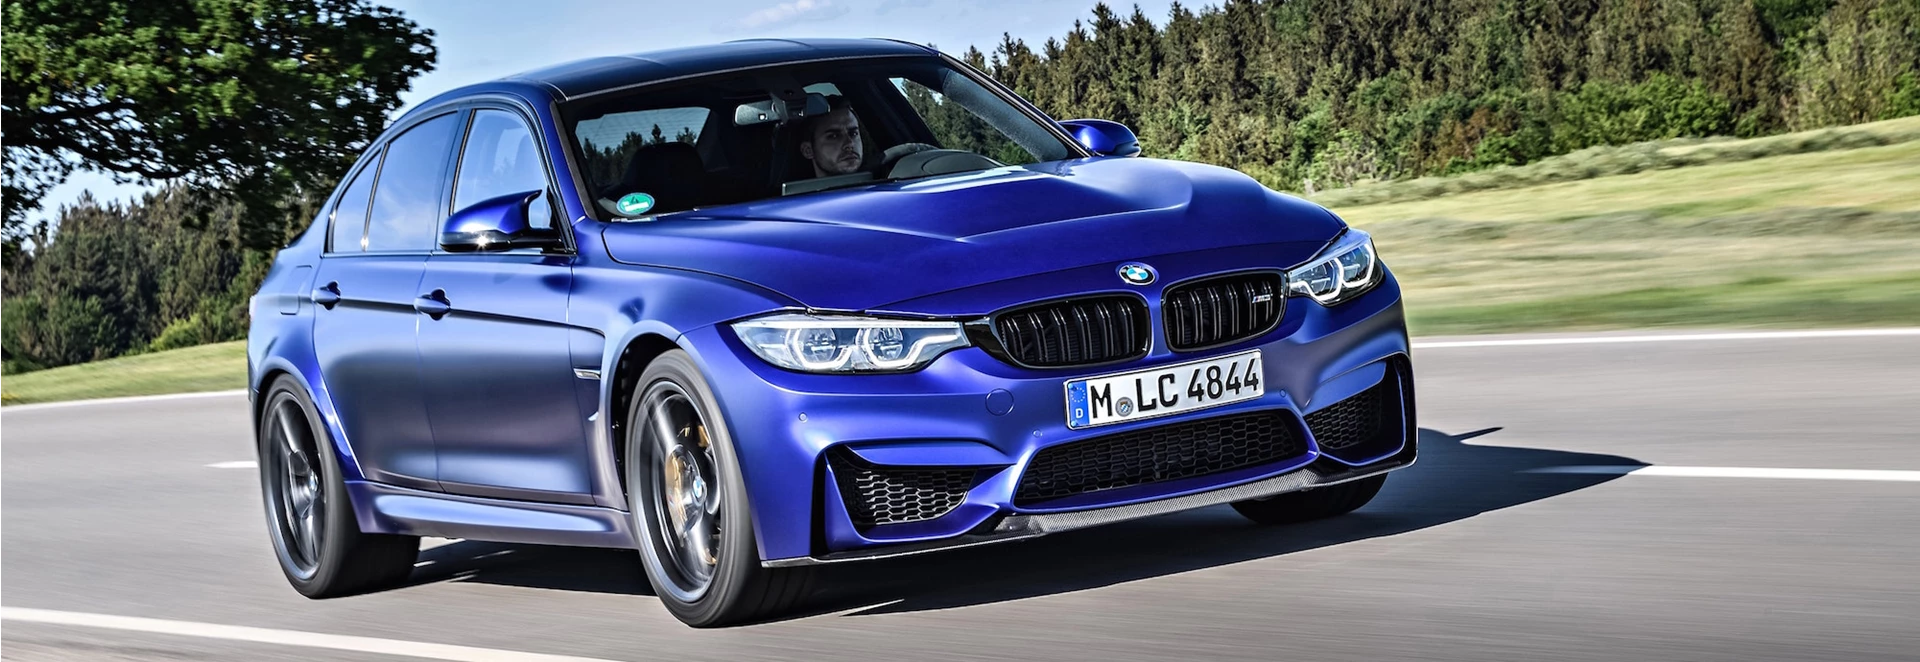 2018 BMW M3 CS review